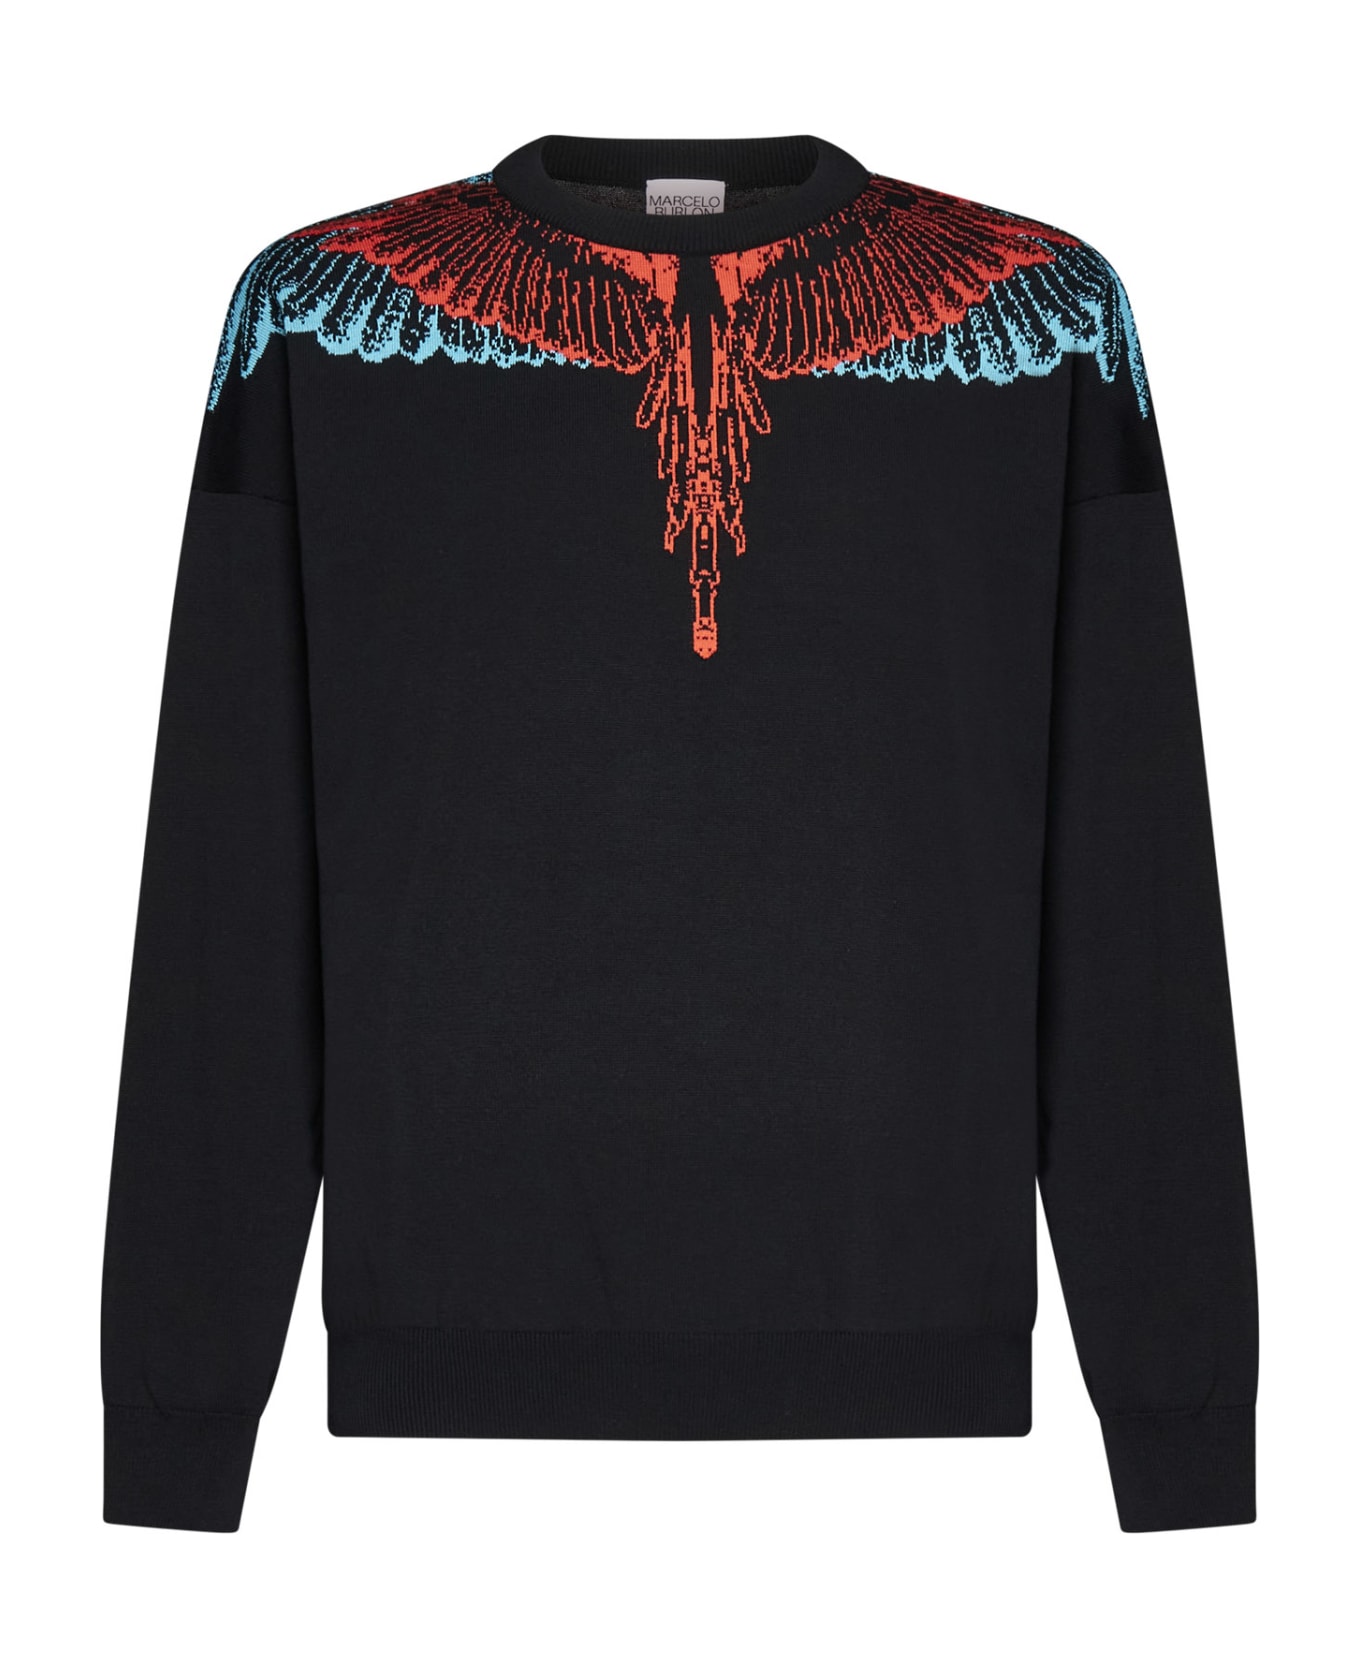 Marcelo Burlon Icon Wings Knit Boxy Crewneck Sweatshirt - Black Red